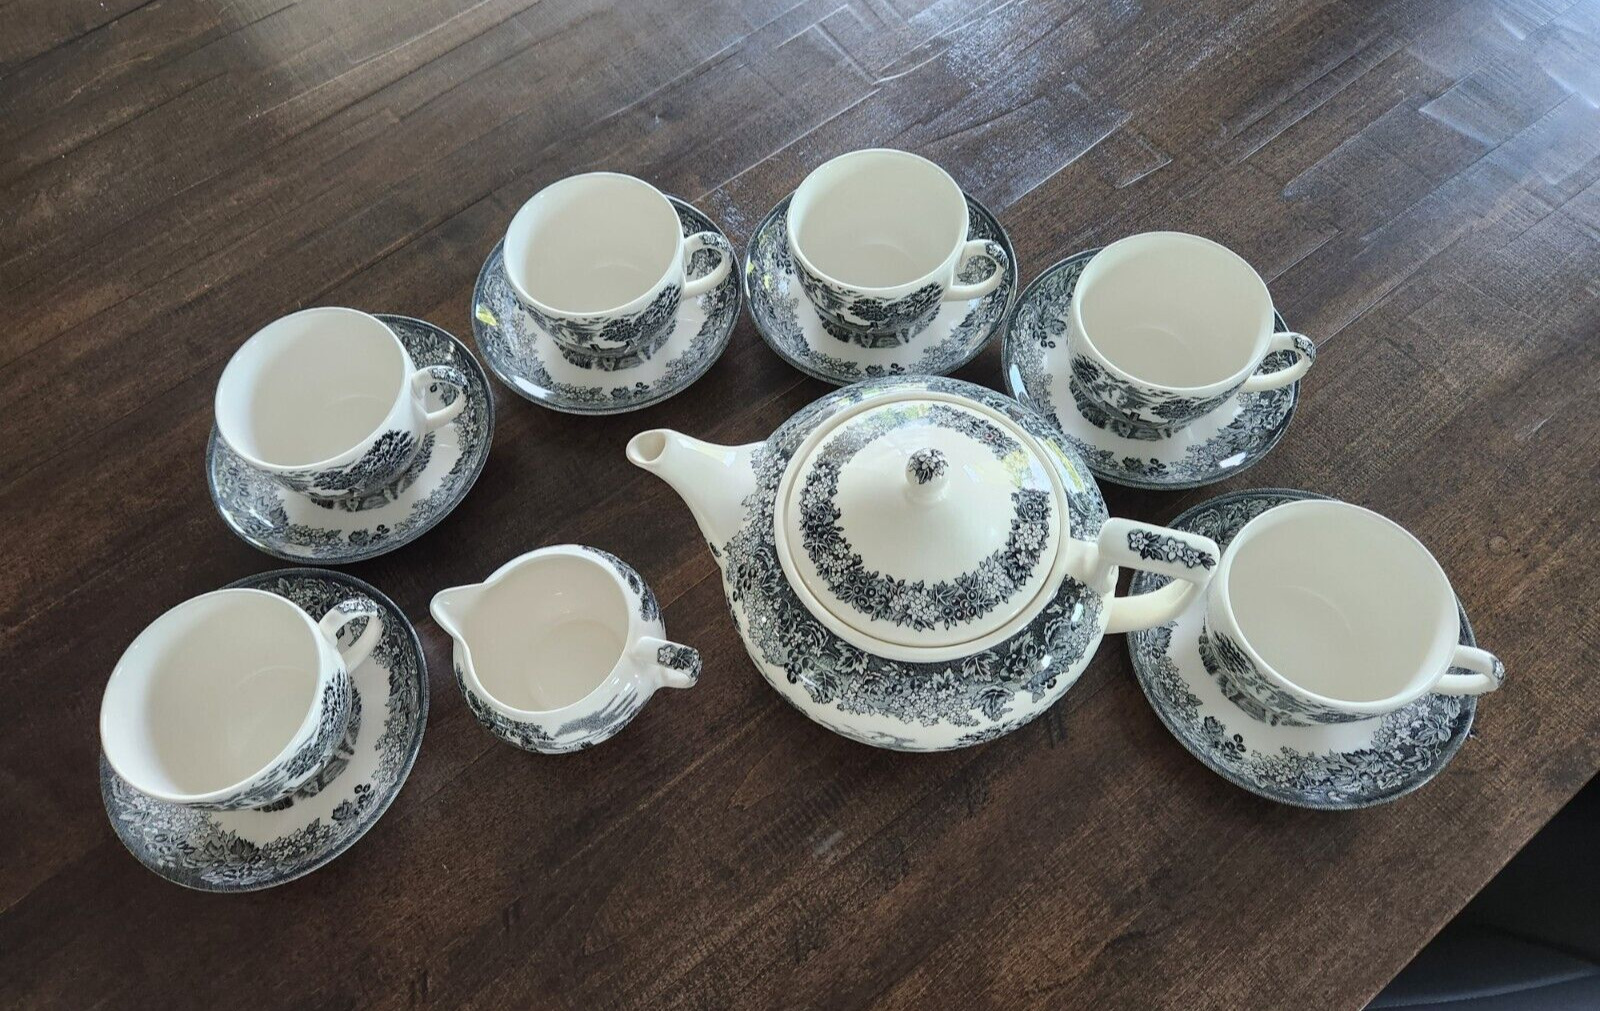 Wedgewood, Teapot, Creamer, 6 cups/saucers,15 Piece,Black/White Romantic England